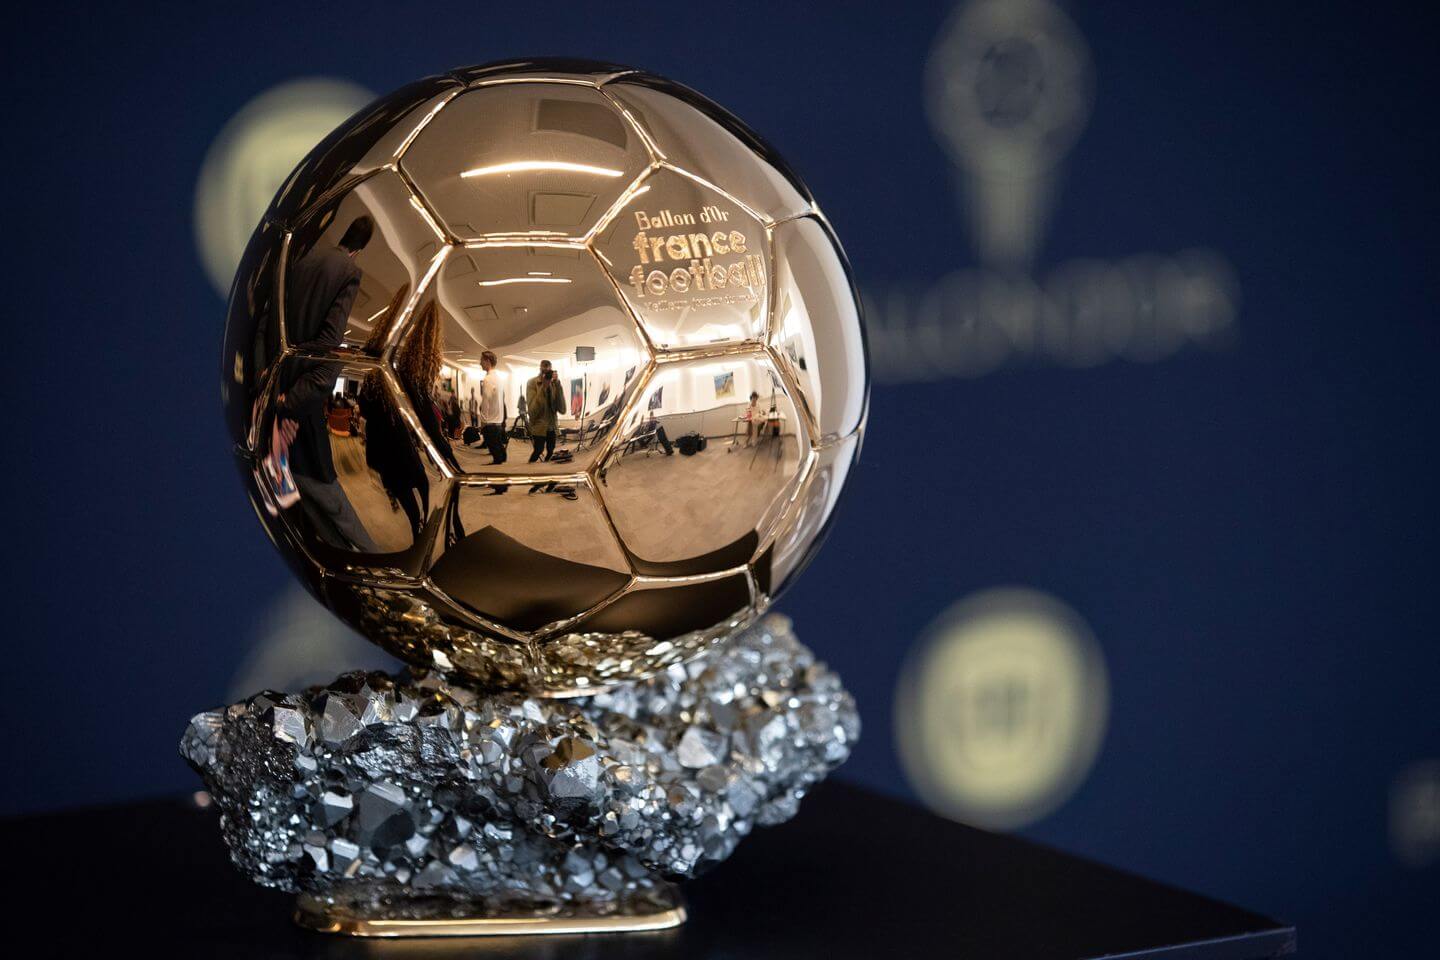 Ballon d'Or 2021 live: Latest updates as Lionel Messi battles likes of Salah and Lewandowski for men's award